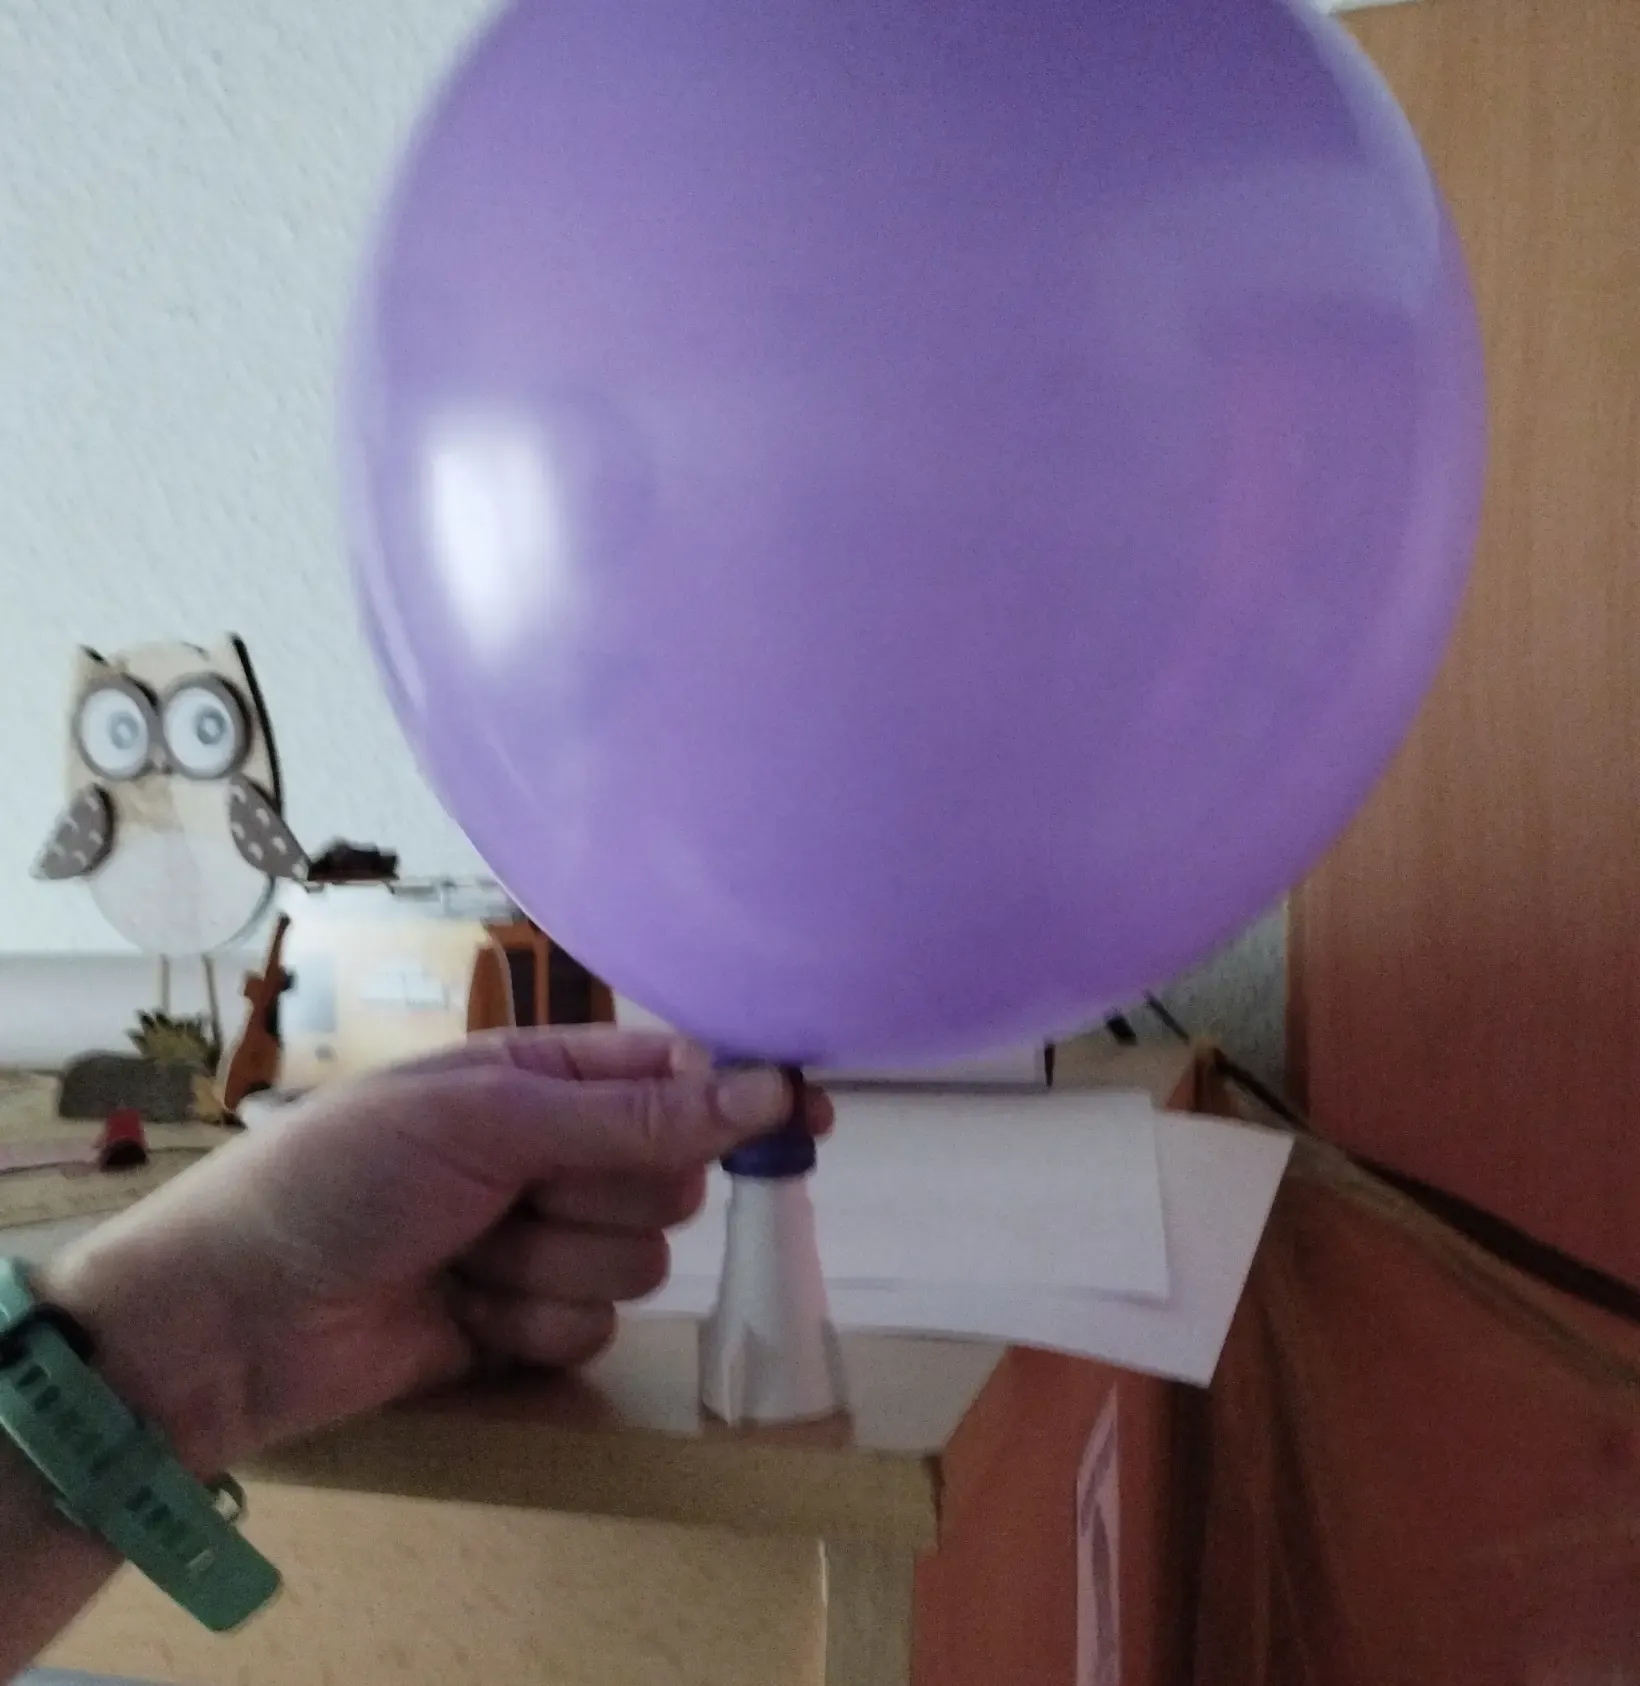 Balloon powered rocket 2